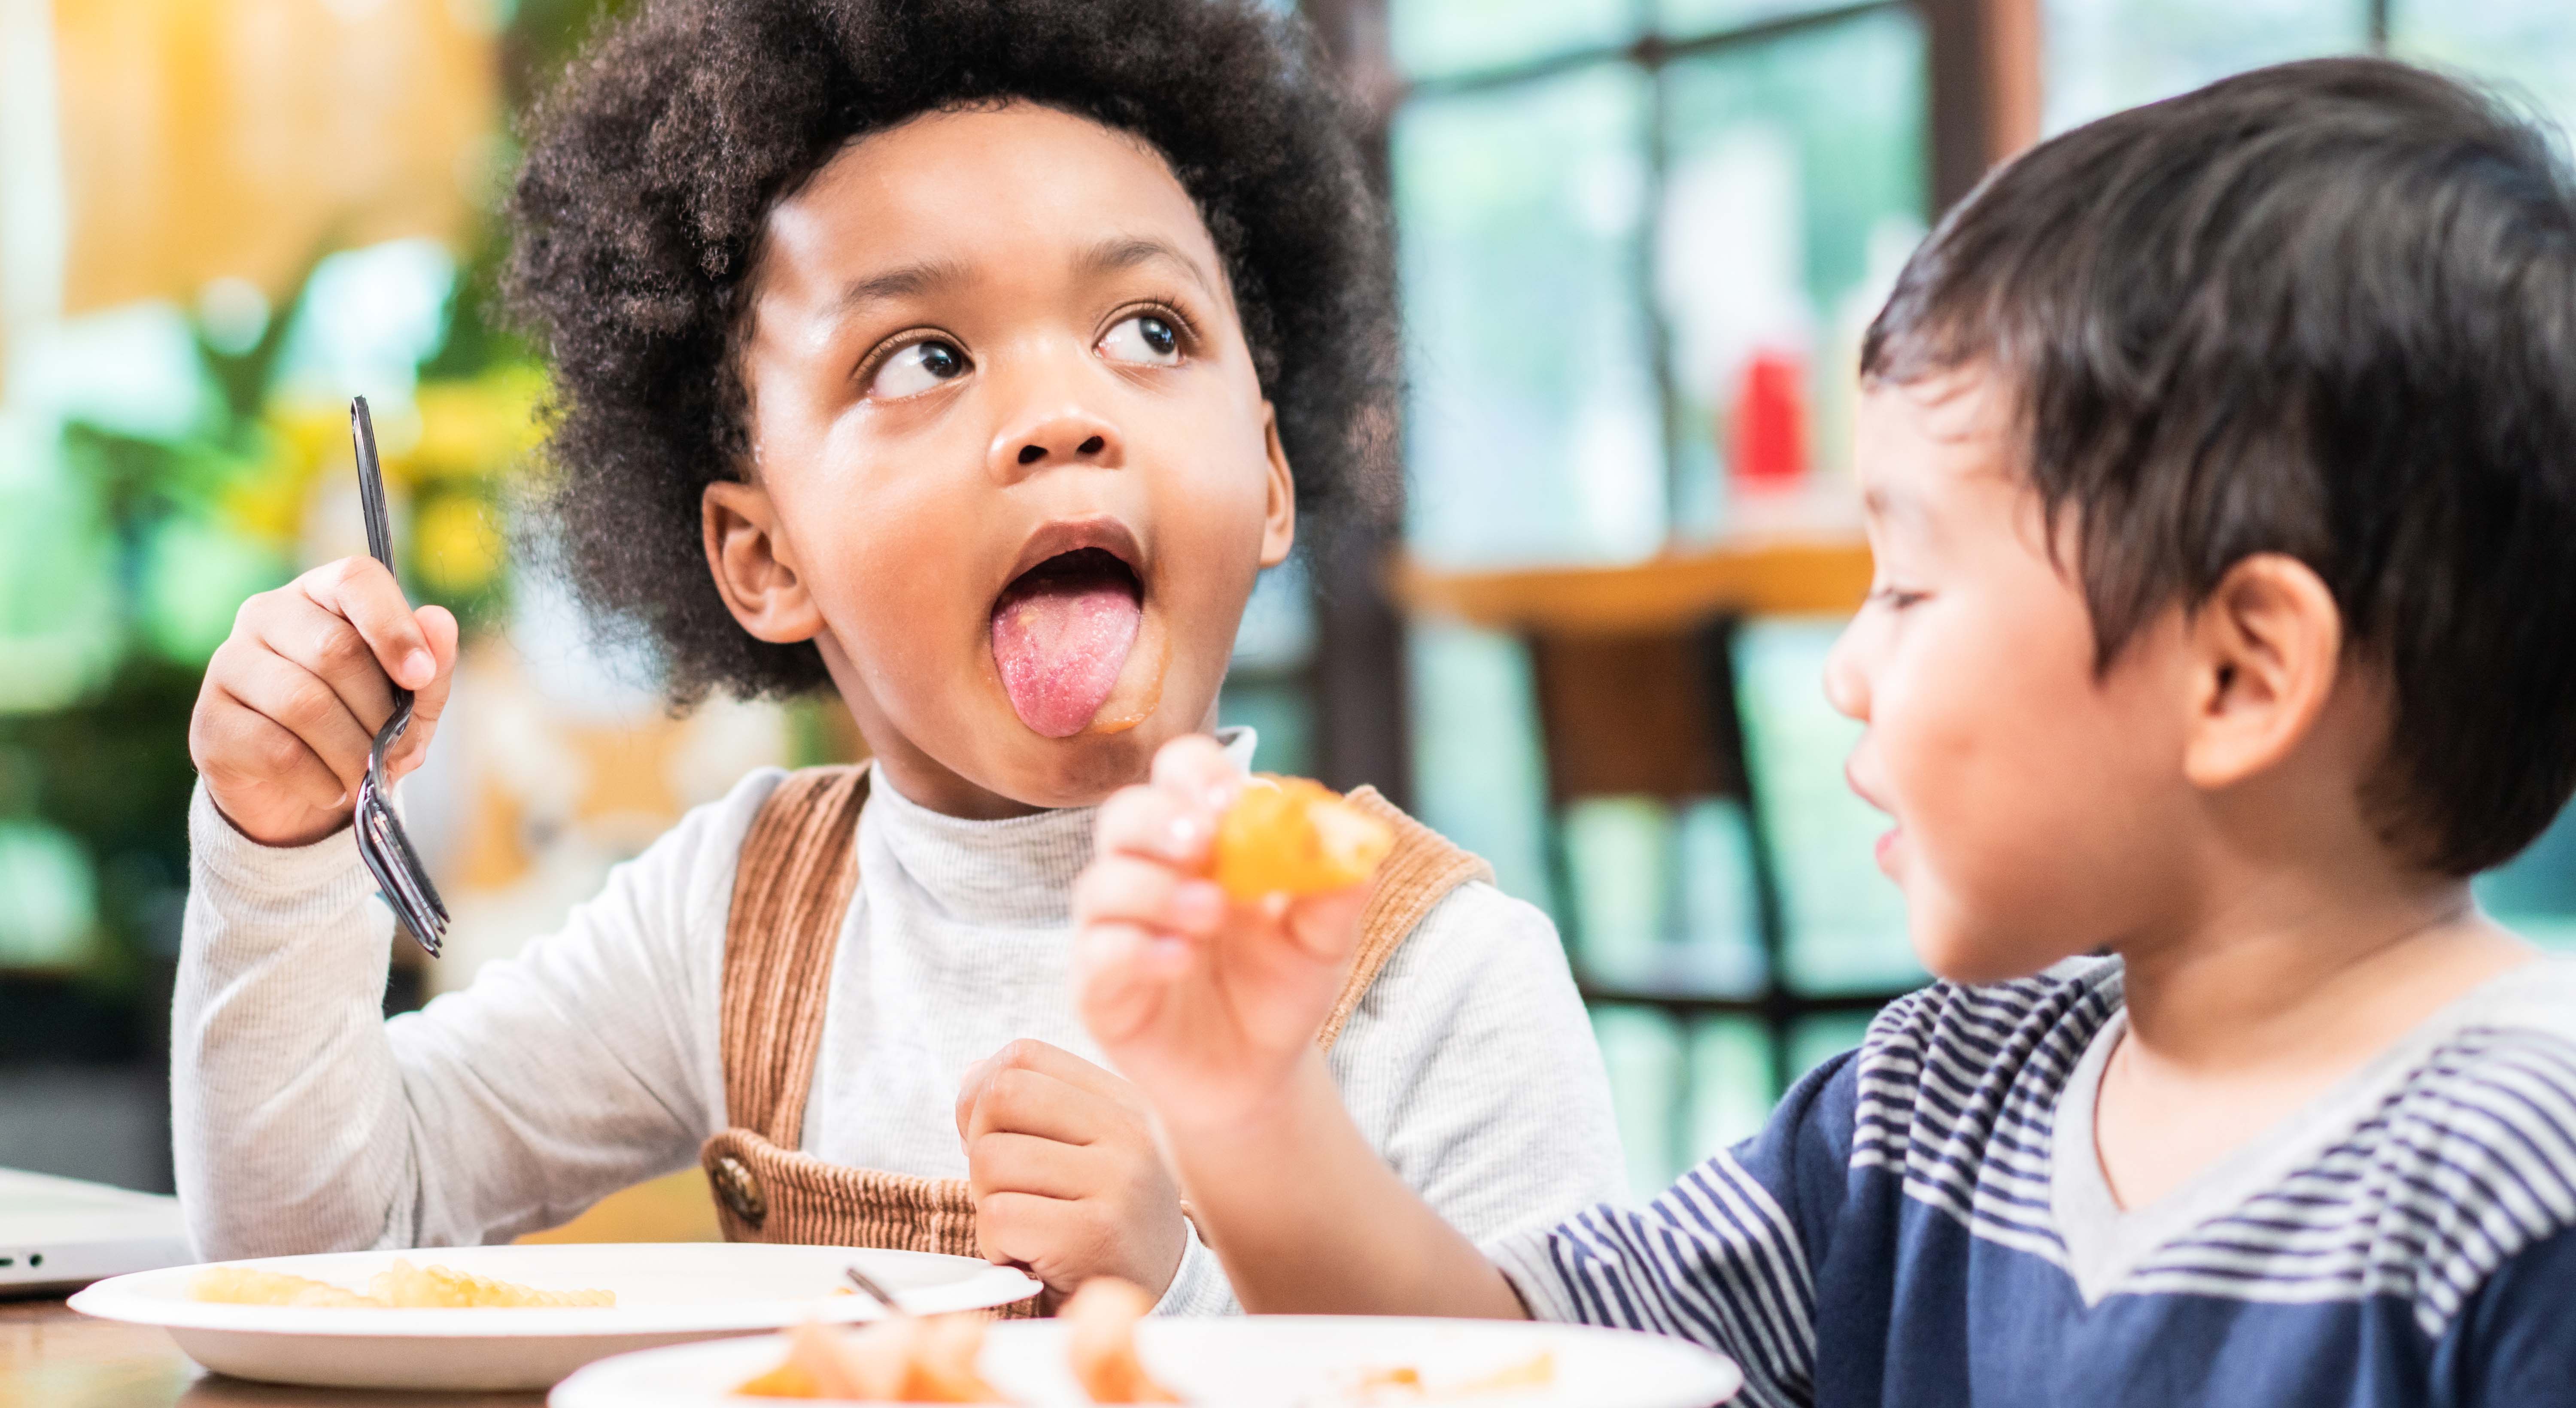 playful-kids-eating-snack-in-cafe-restaurant-2021-08-30-06-28-04-utc